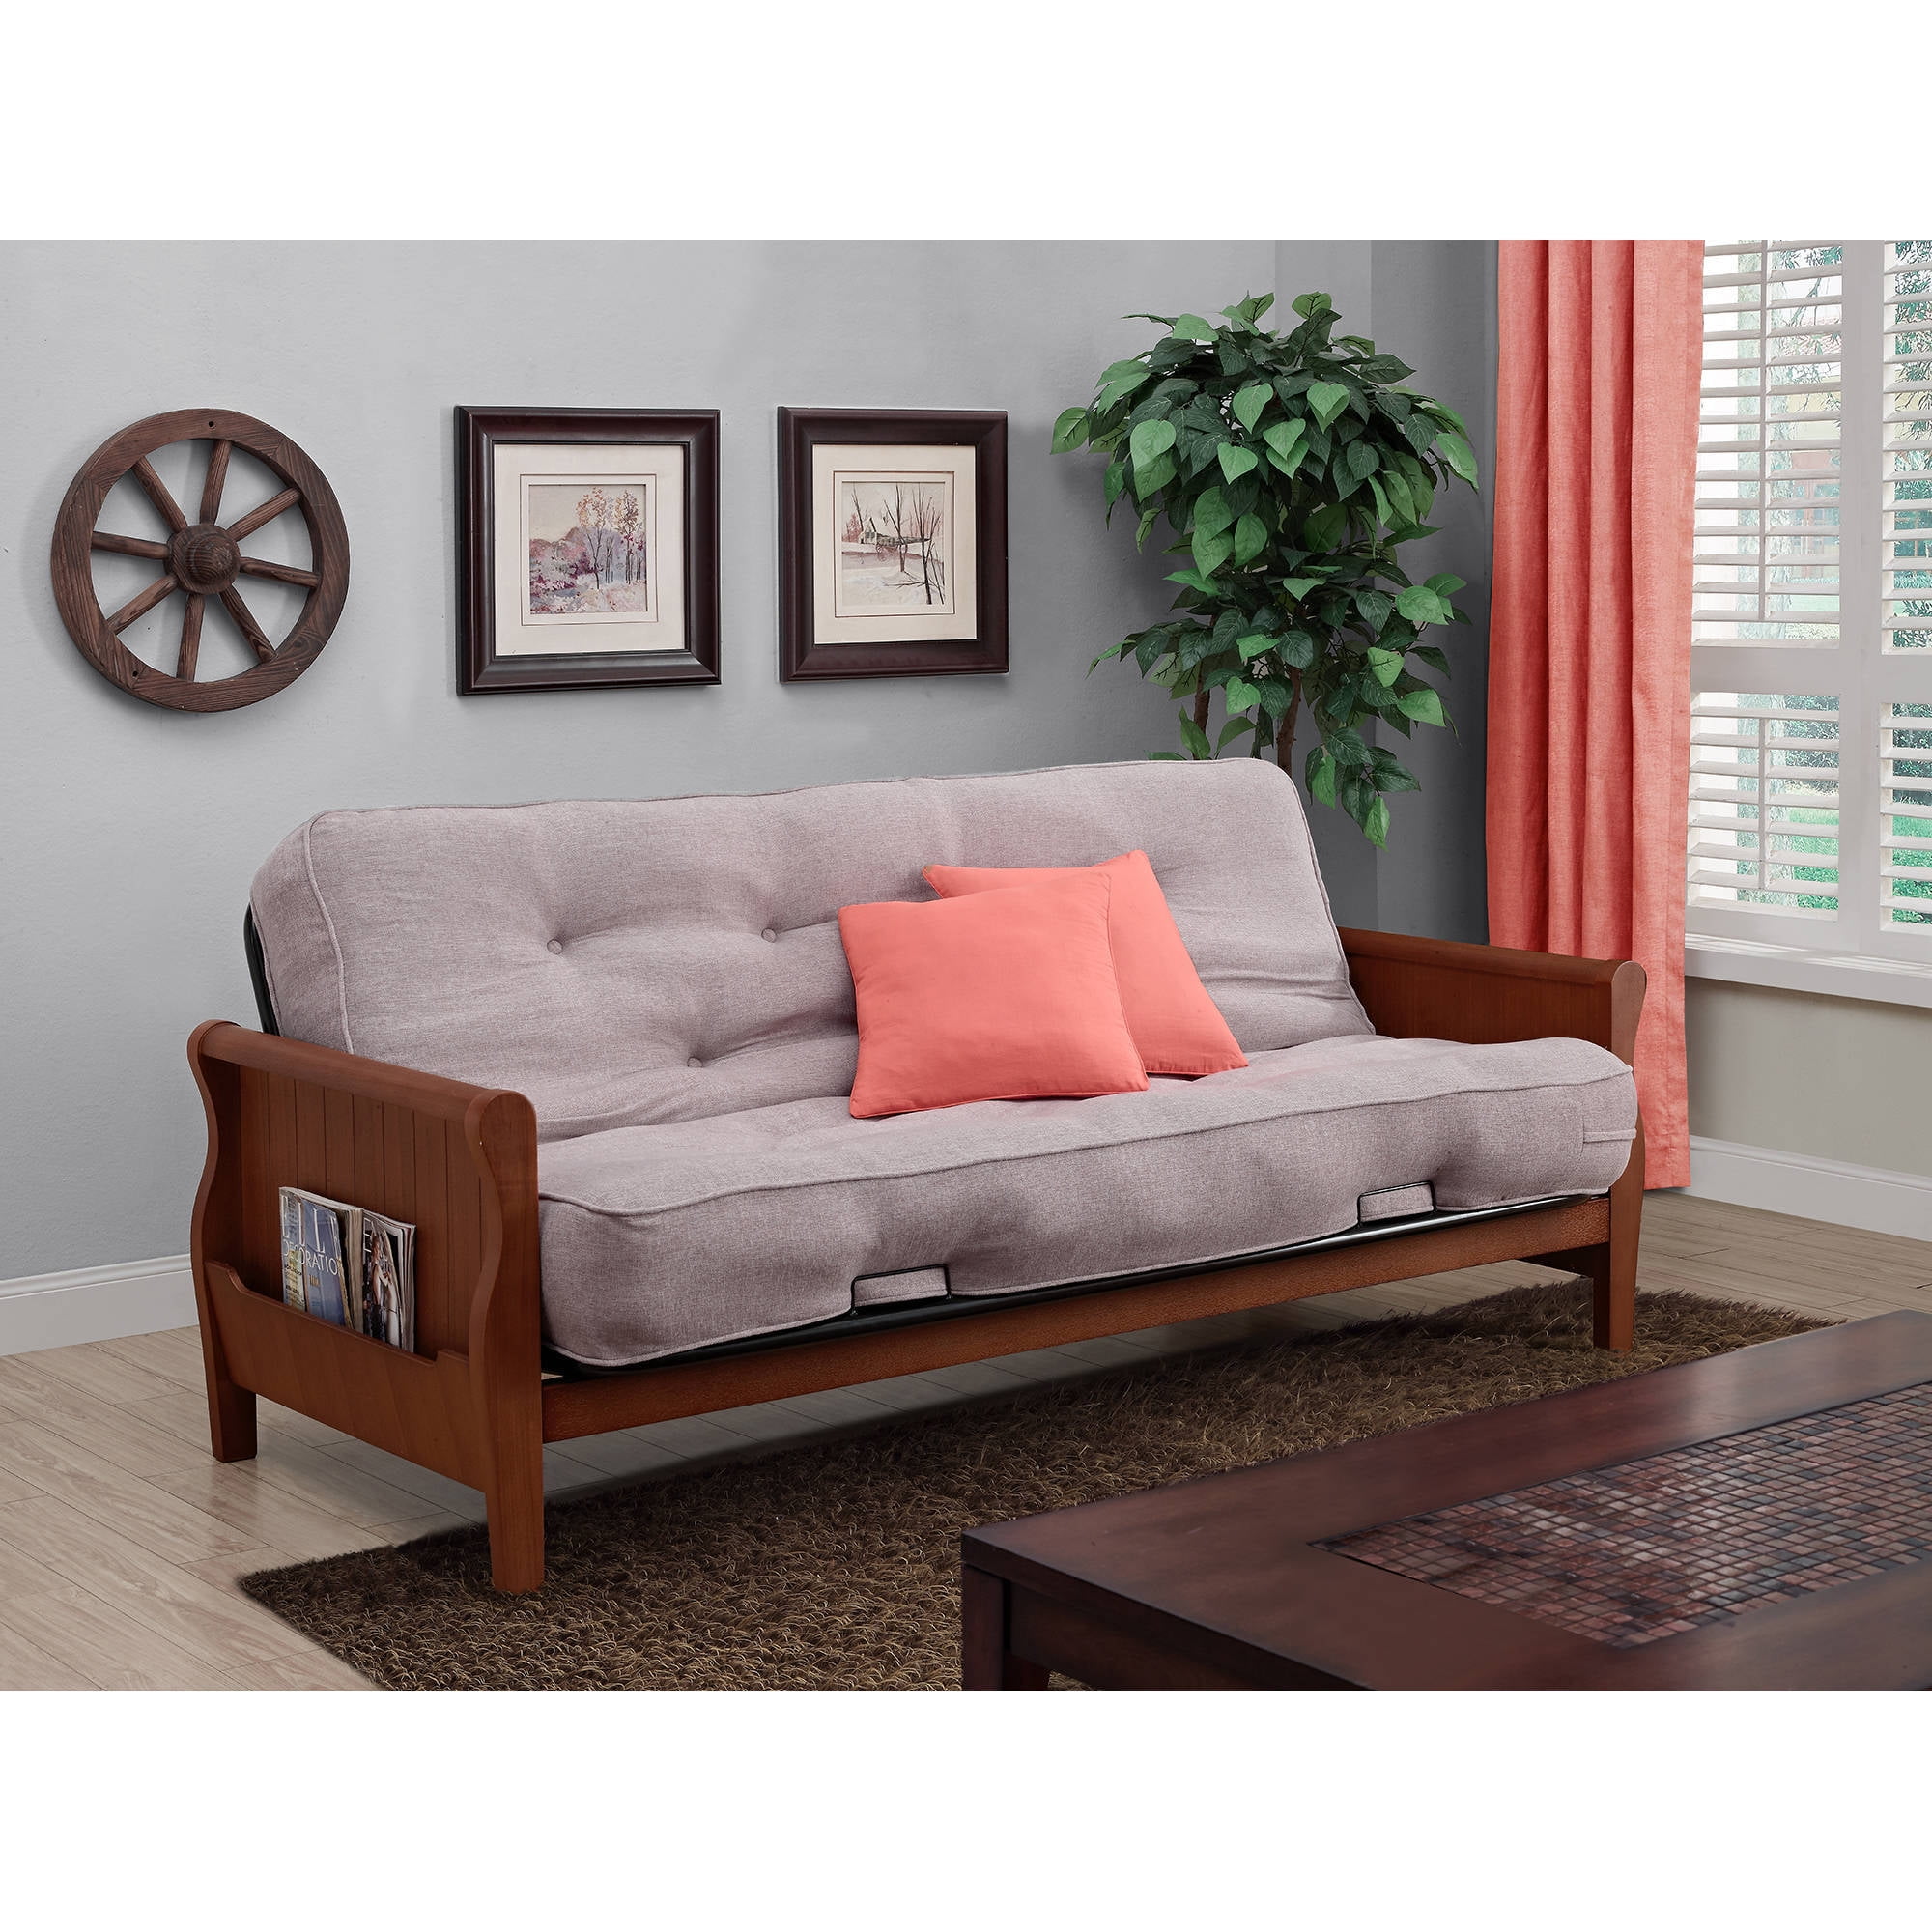 Wooden Arm Futon Frame Sofa Bed With Mattress Full Size Sleeper Hardwood Gray 